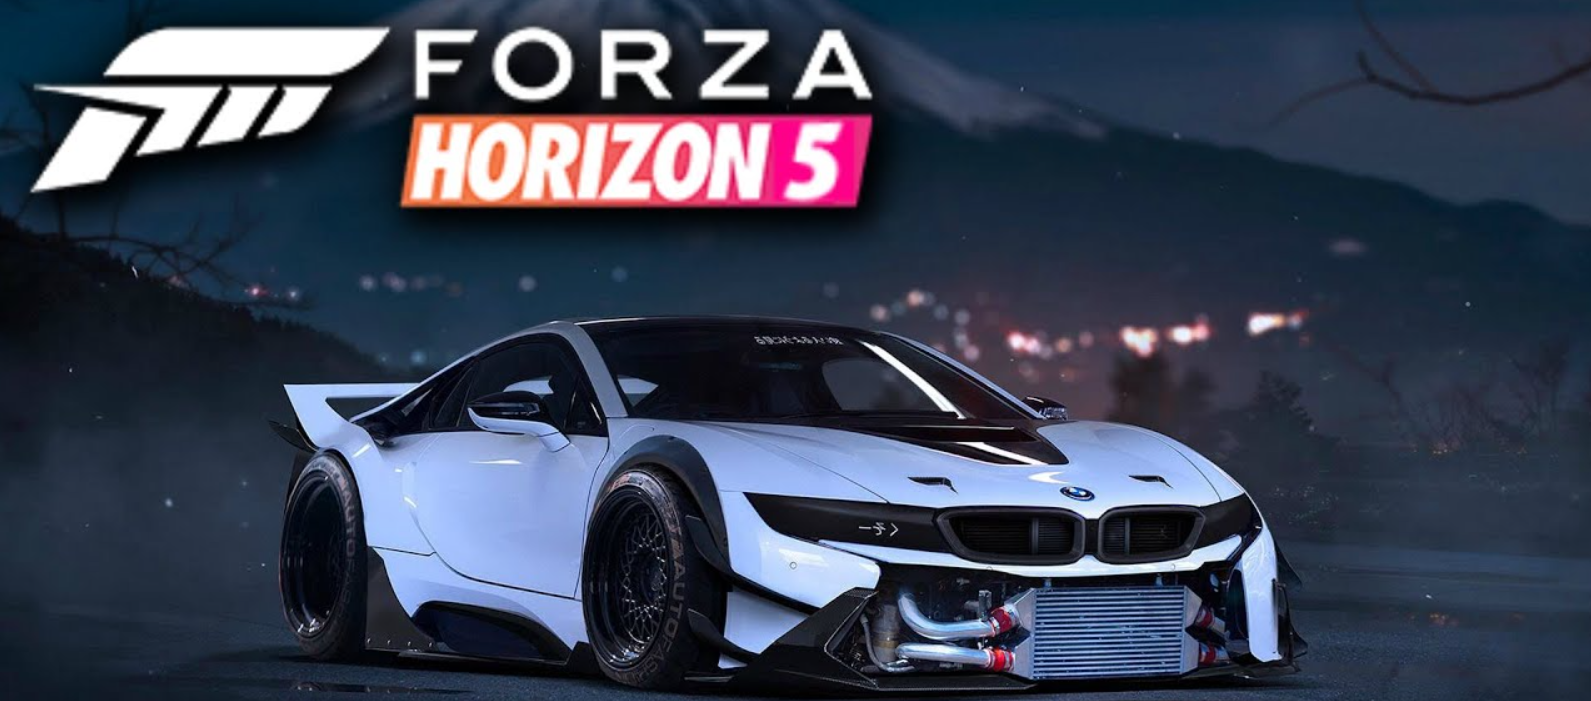 Forza horizon 5 repack. Forza Horizon 5 Постер. Forza Horizon 5 обложка. Forza Horizon 5 Xbox. Forza Horizon 5 Premium.